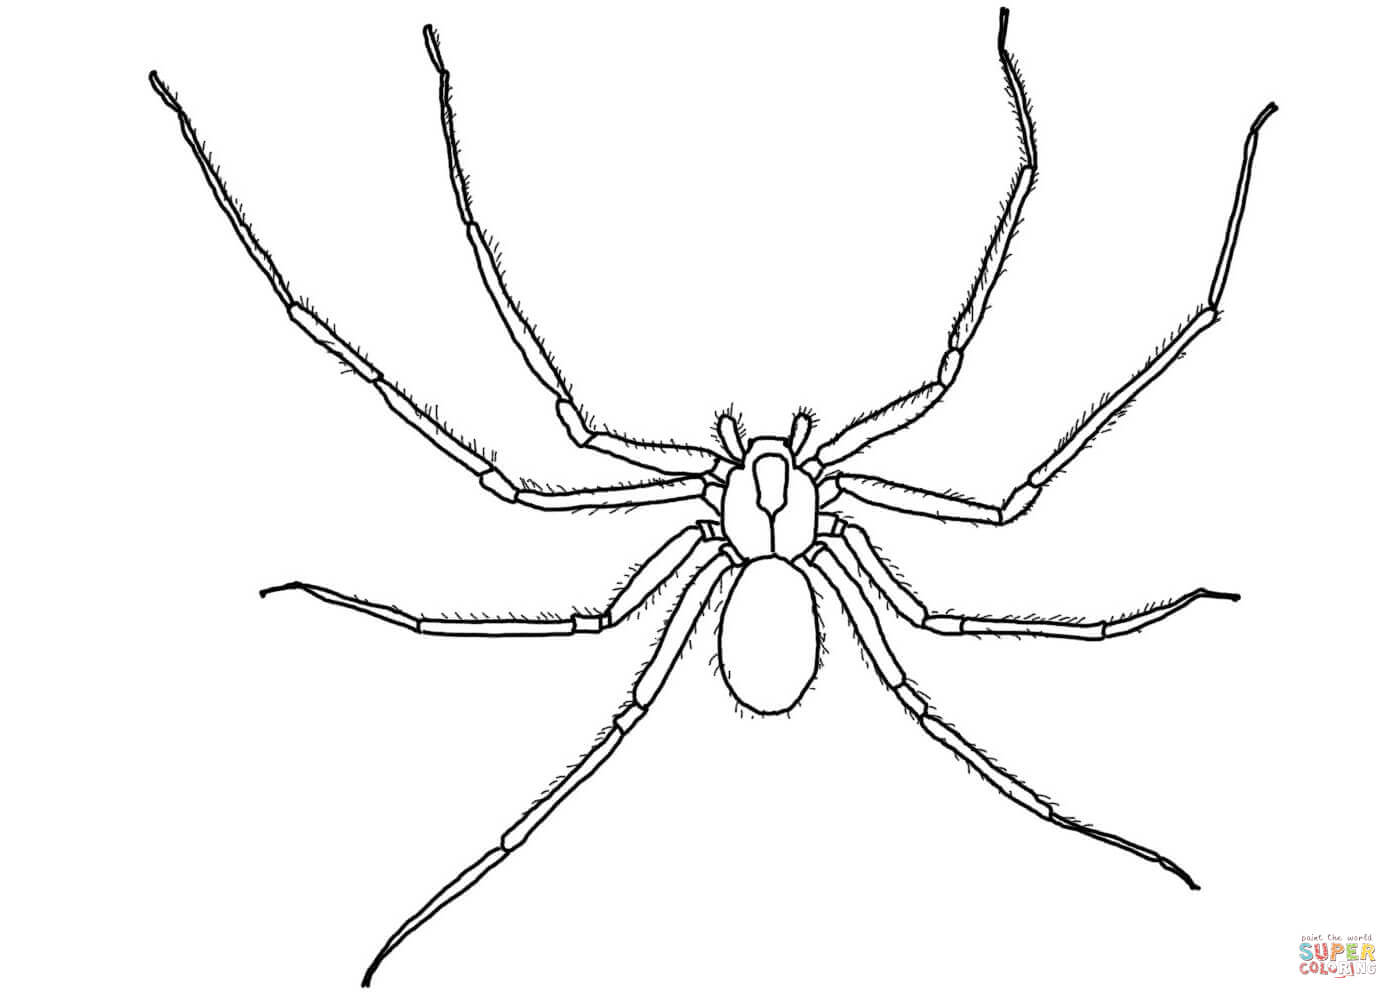 Arachnid coloring #13, Download drawings